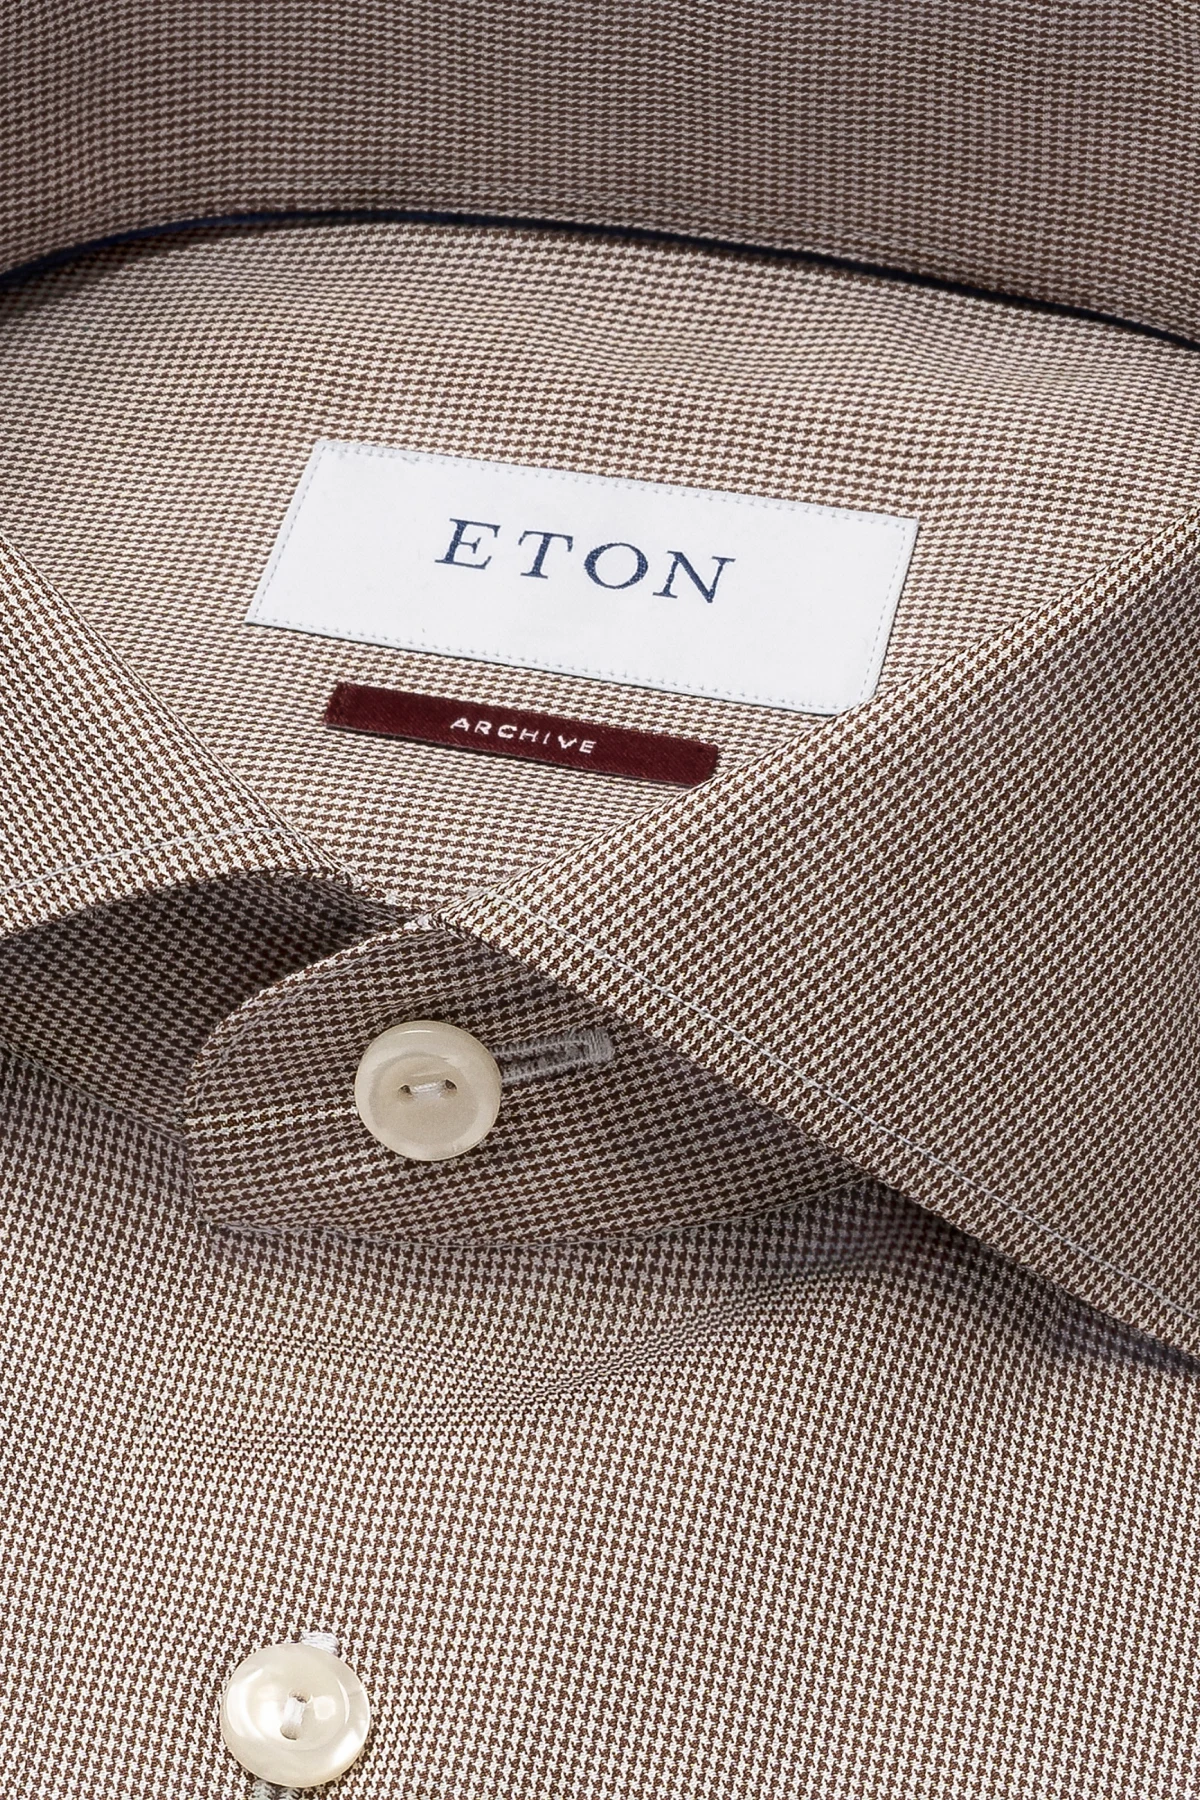 shirt archive eton close up